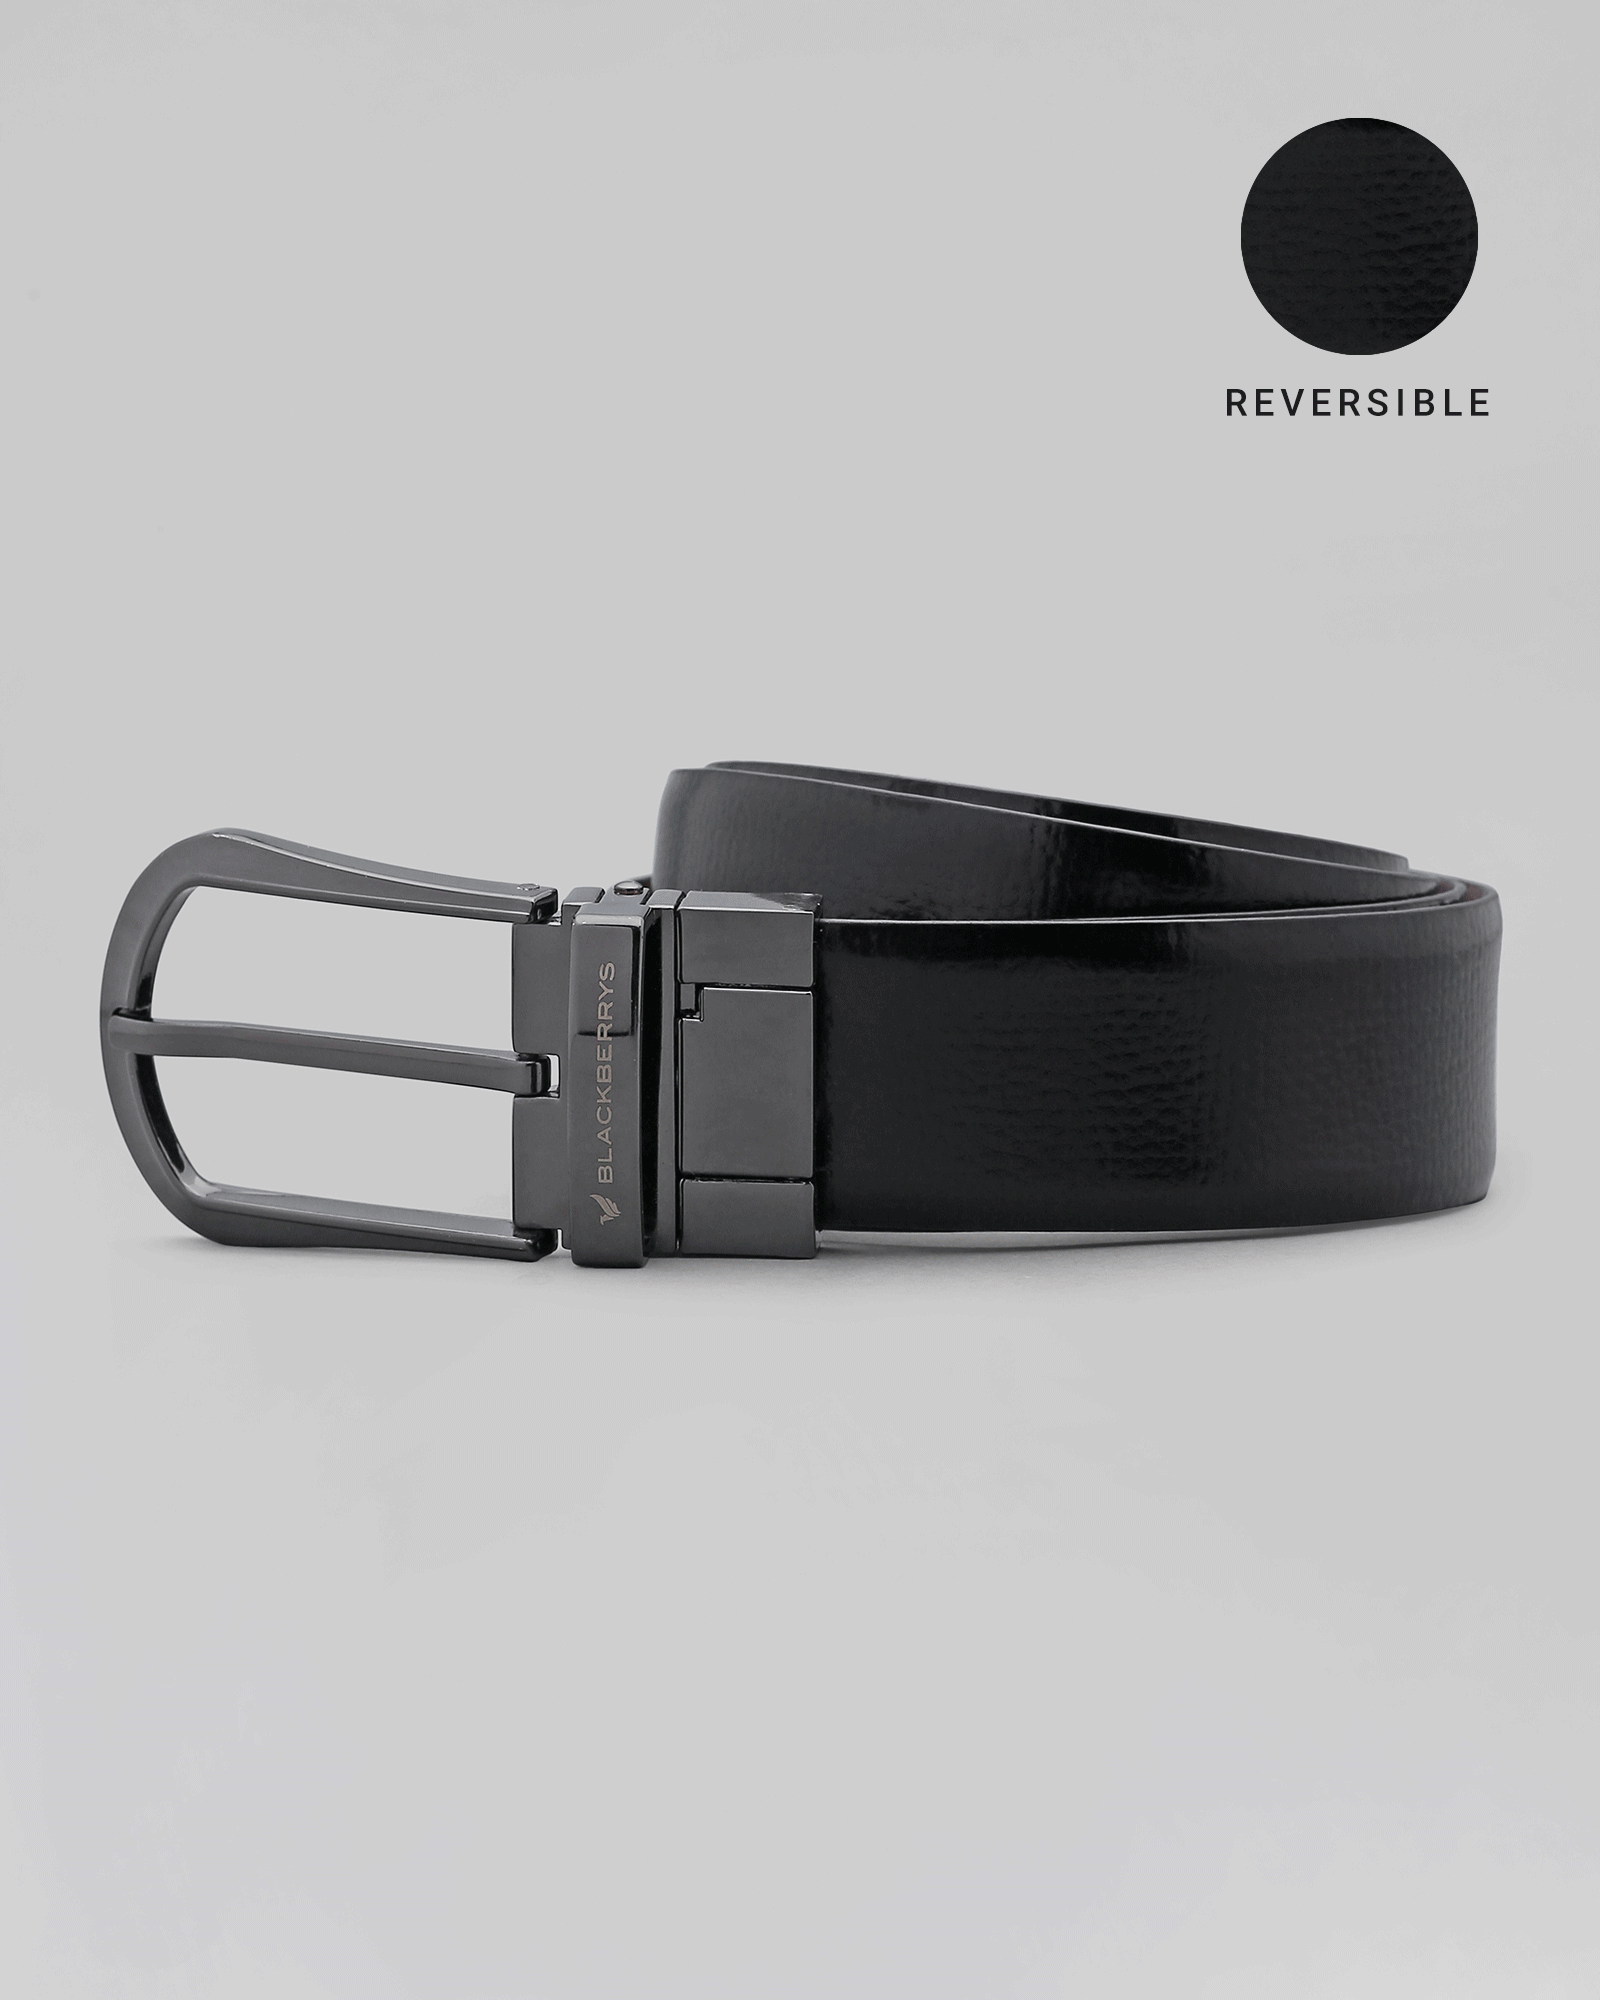 Leather Reversible Black Tan Textured Belt - Perley